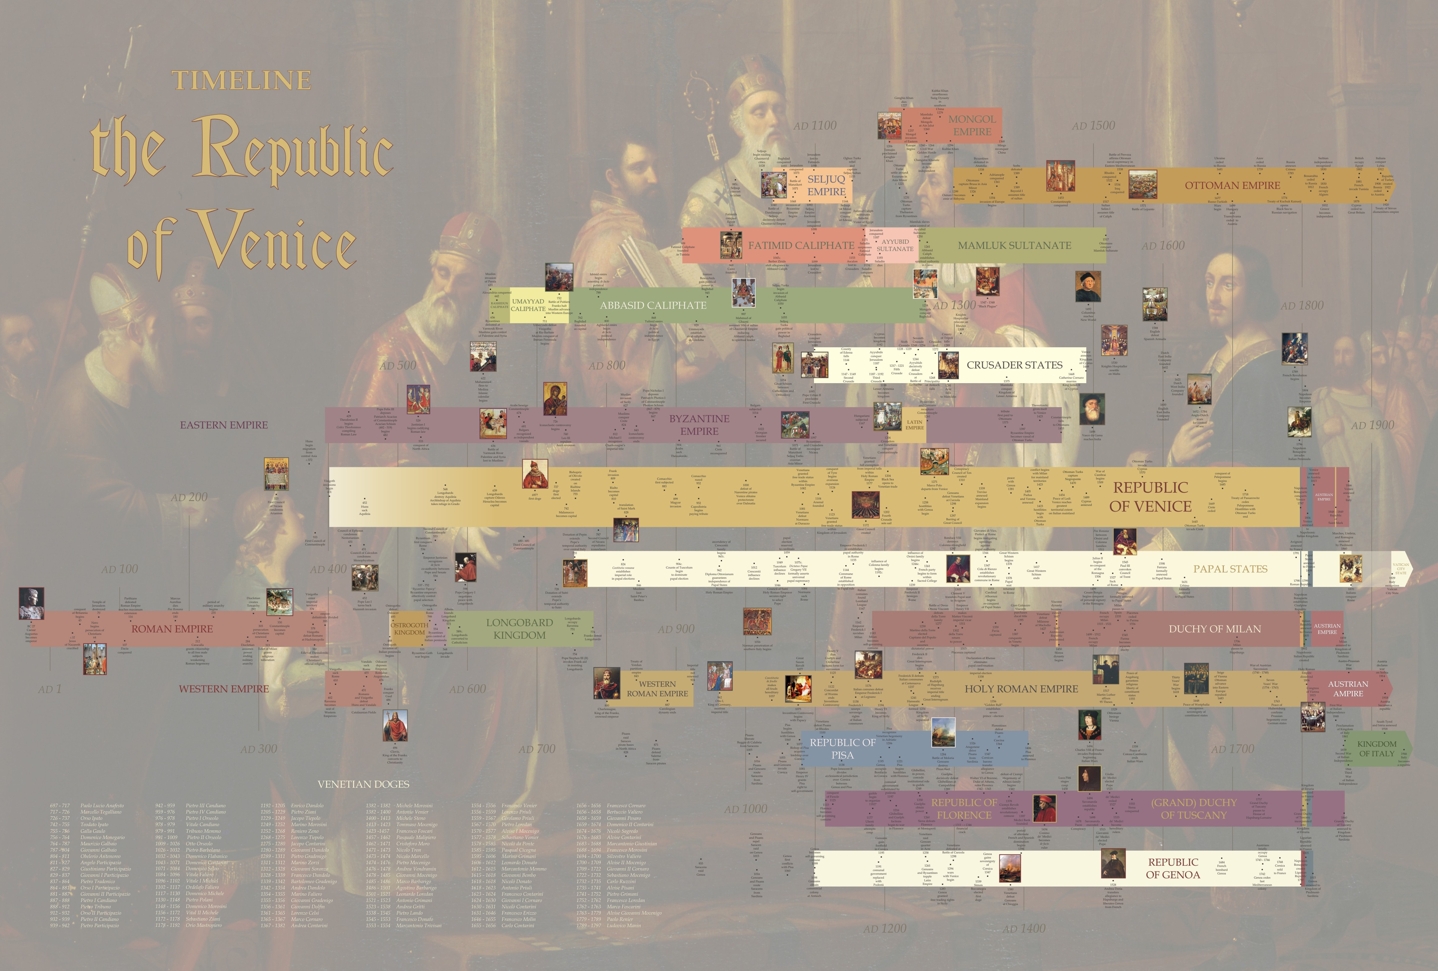 Timeline of Venetian history